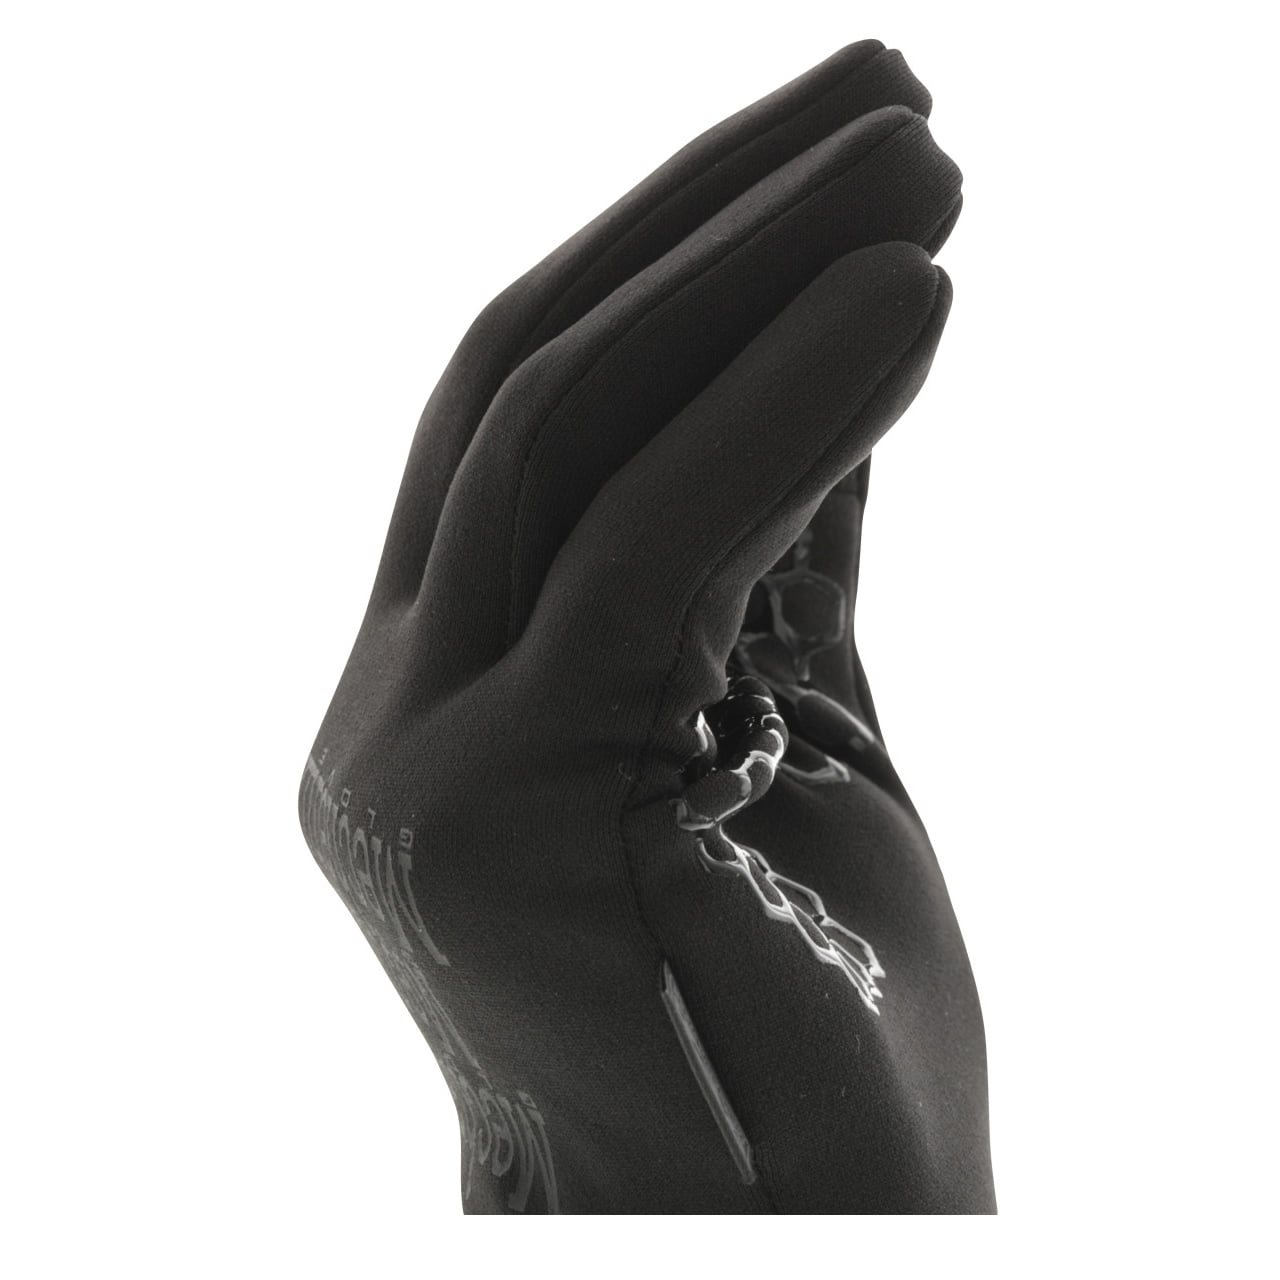 MECHANIX WEAR Gloves COLDWORK BASE LAYER Softshell BLACK